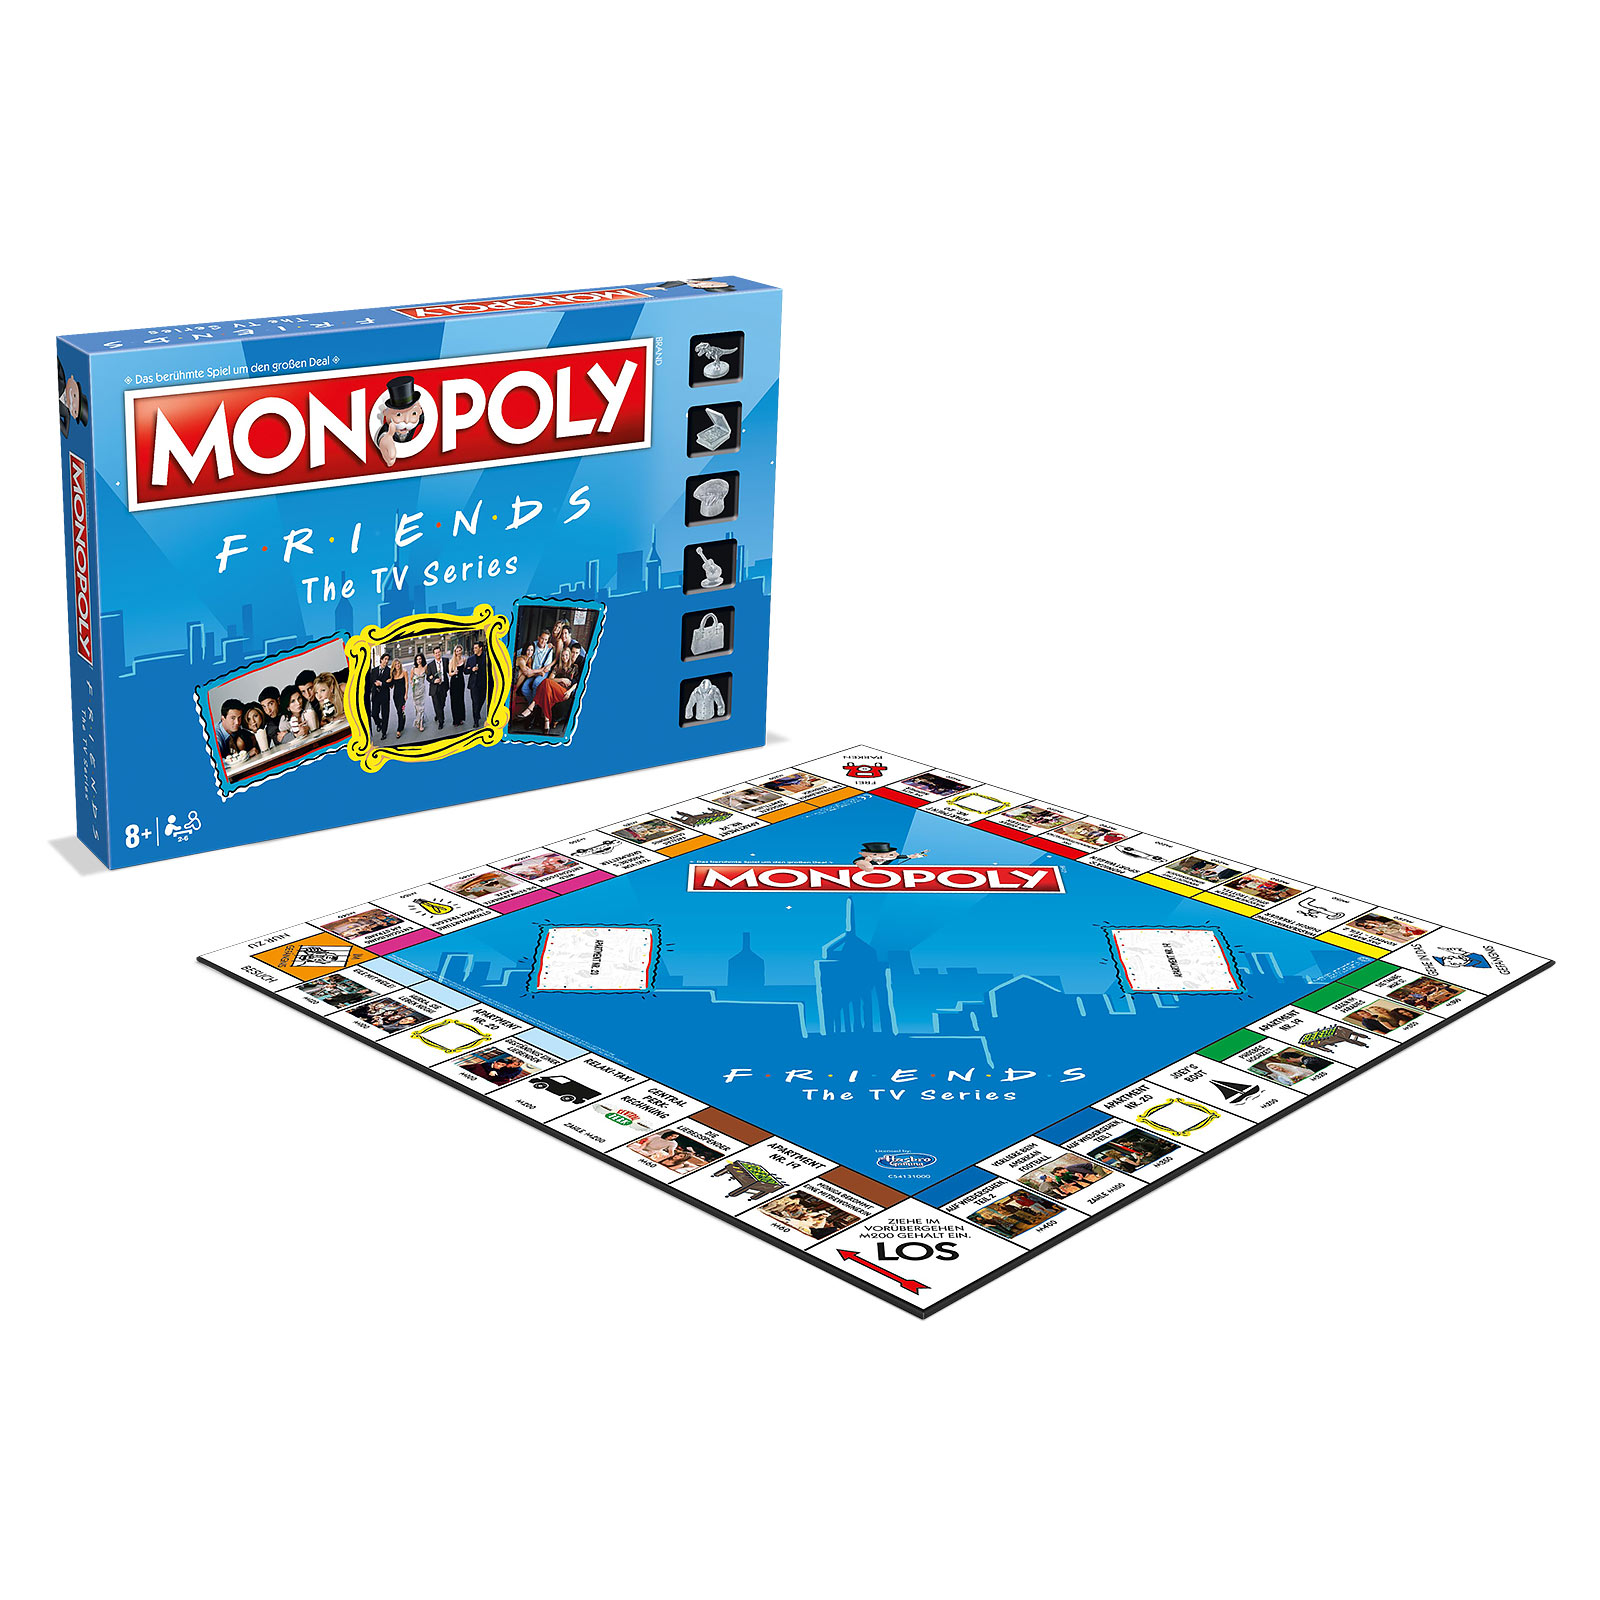 Friends - Monopoly